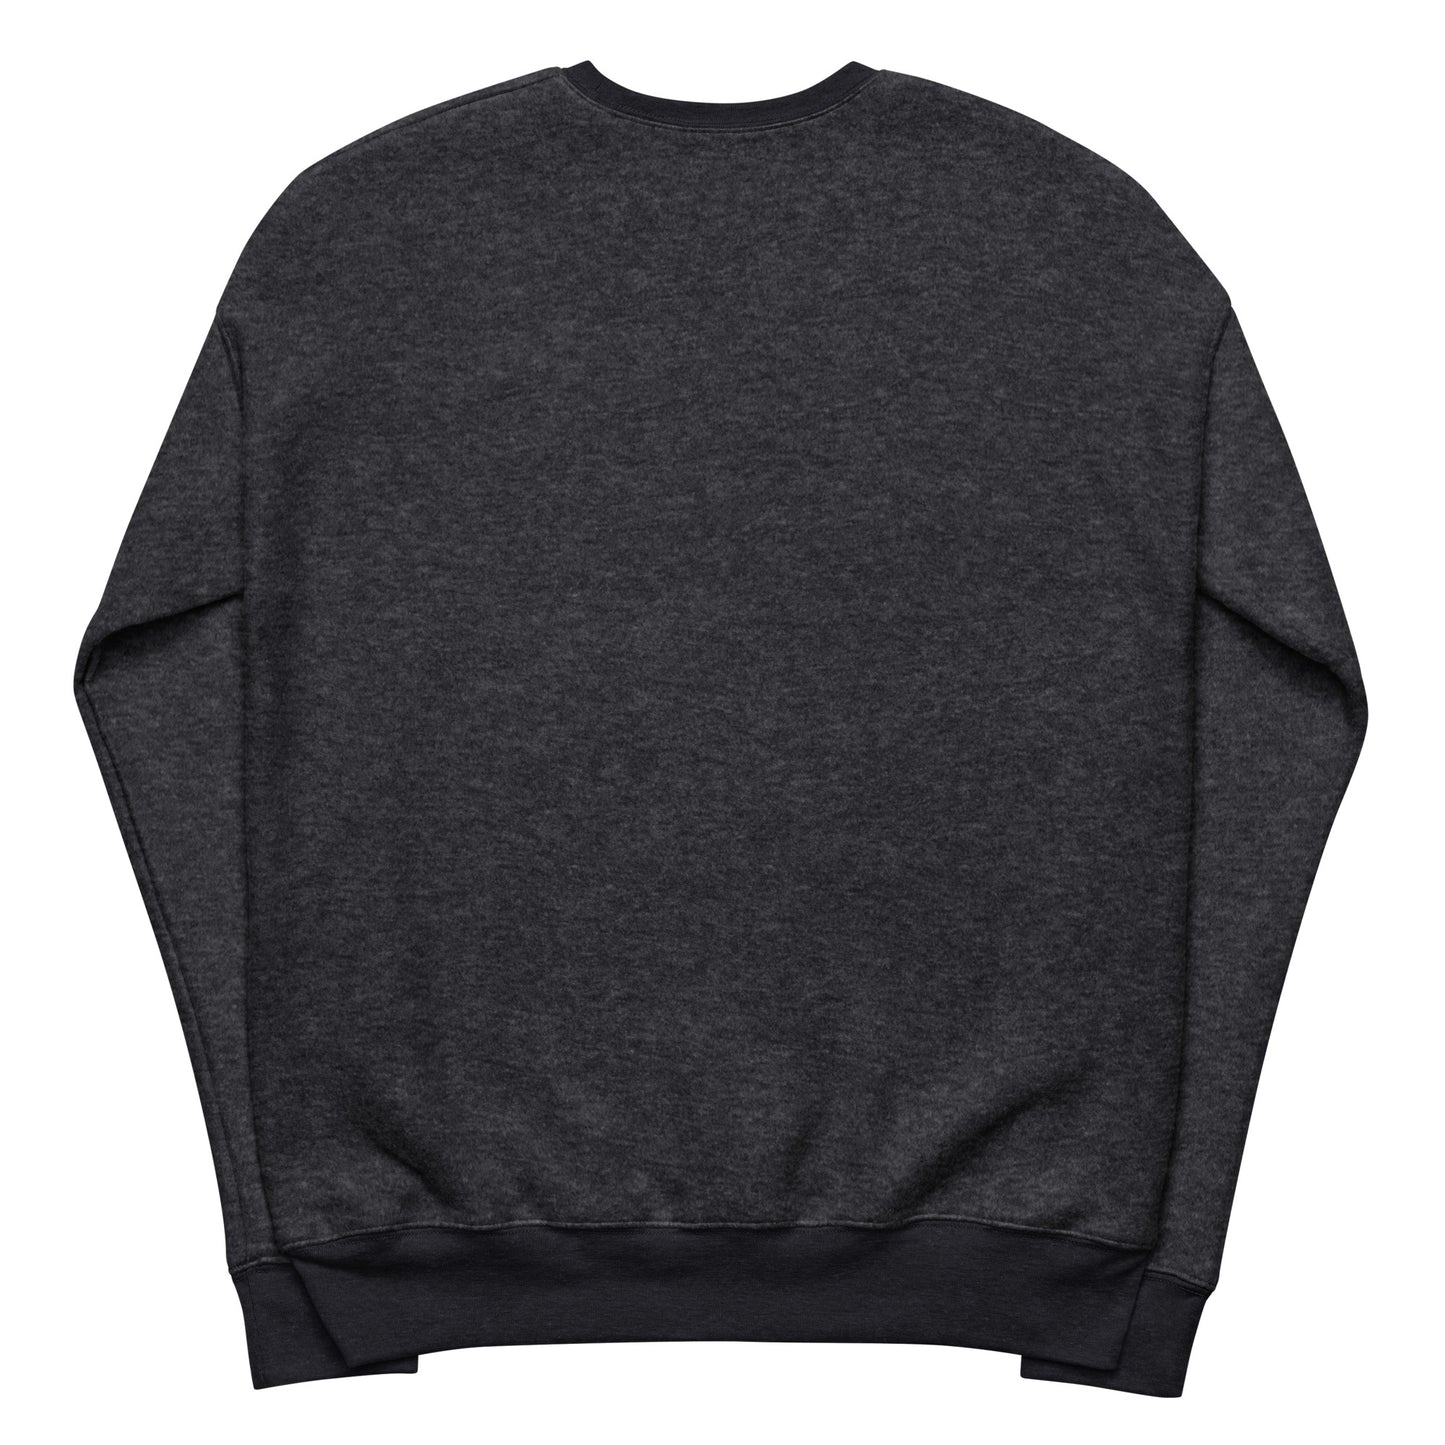 Coloan Unisex Sueded Fleece Sweatshirt (Black embroidered logo)